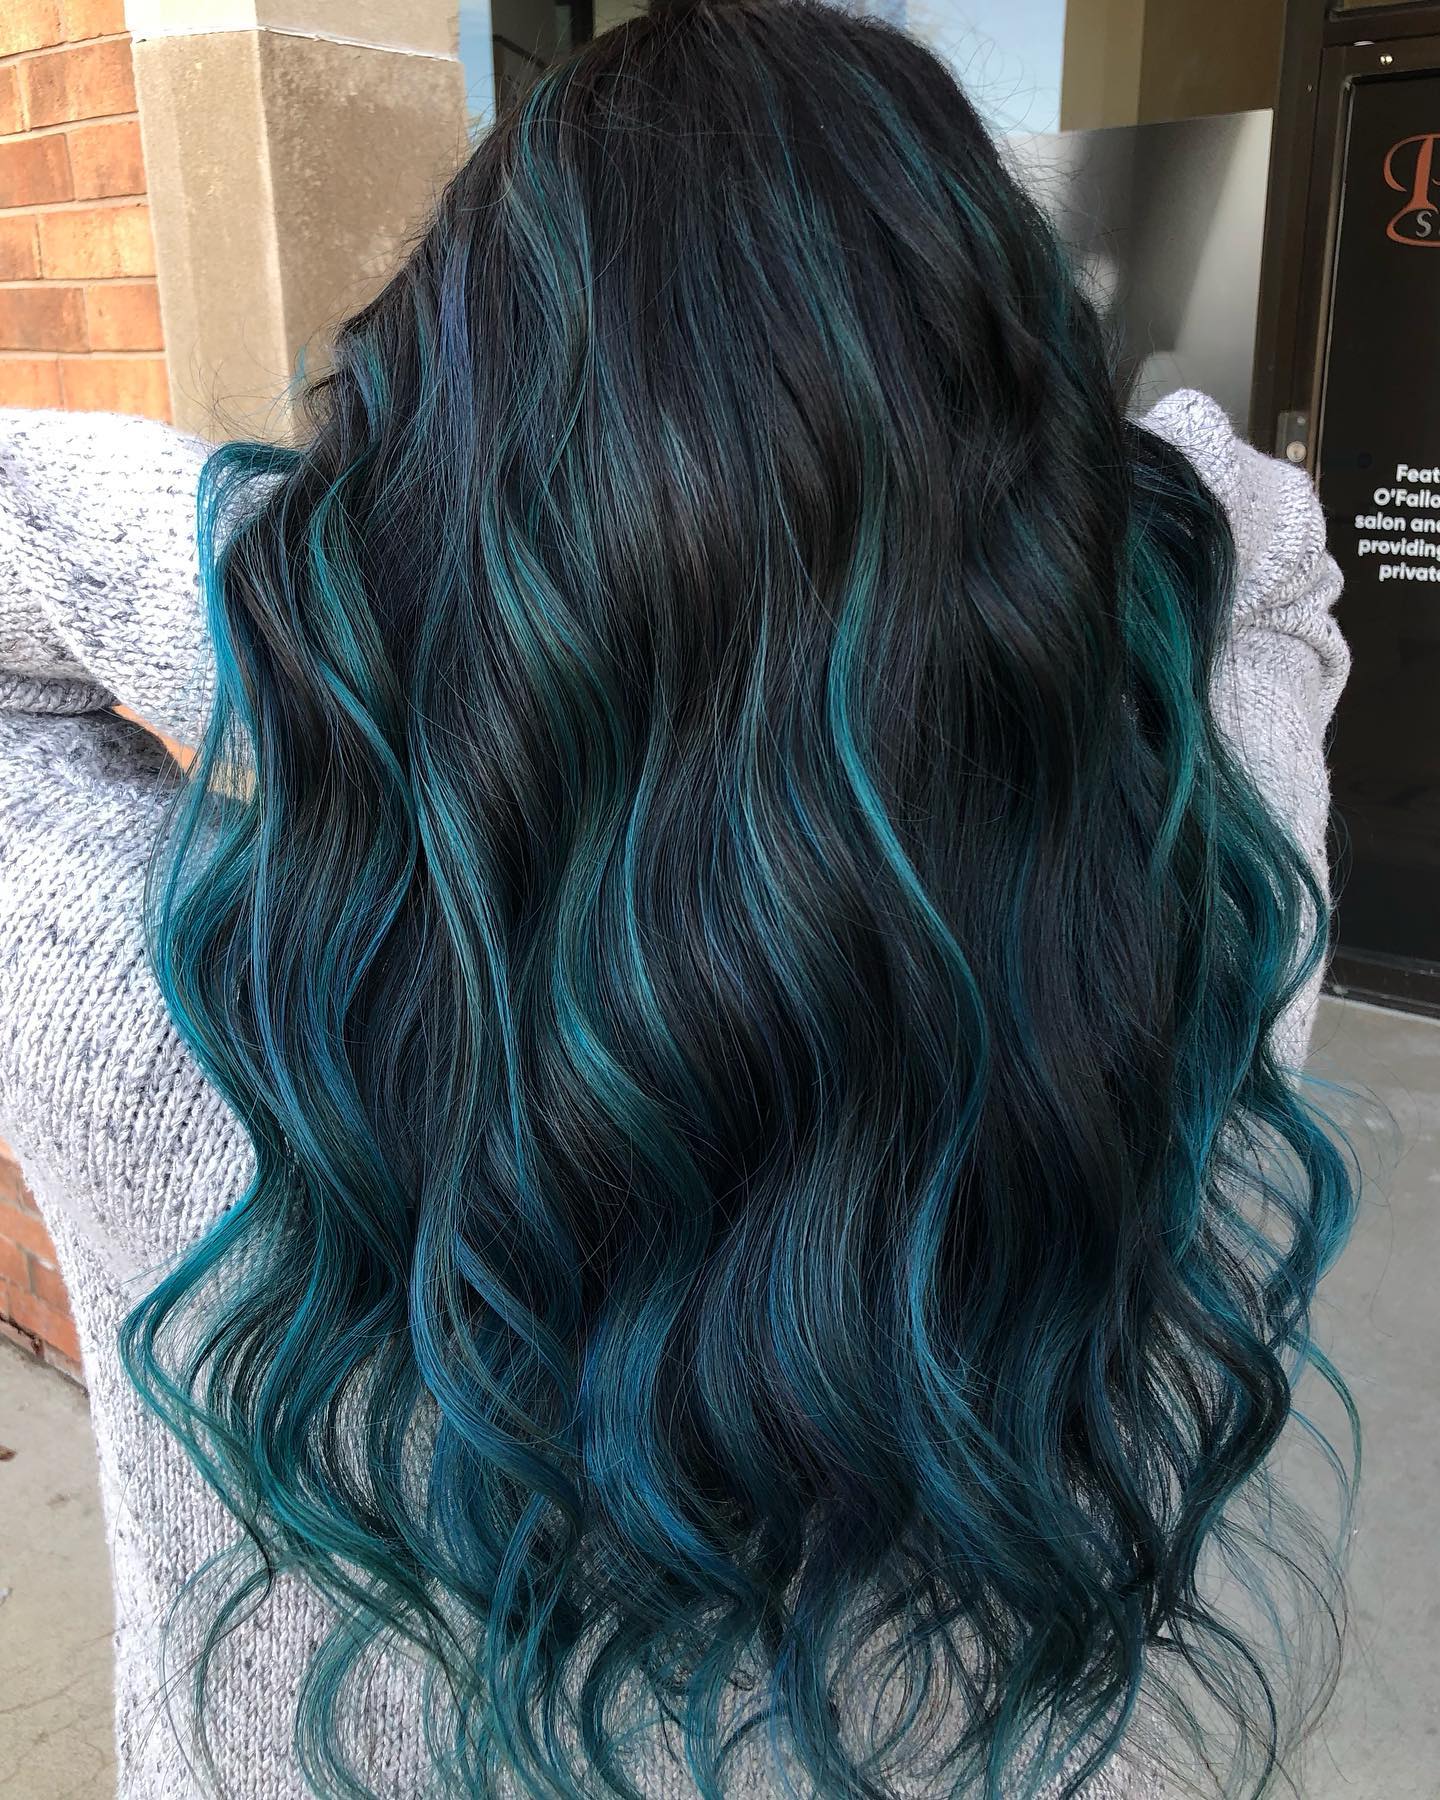 Teal Turquoise Highlights on Long Wavy Dark Hair